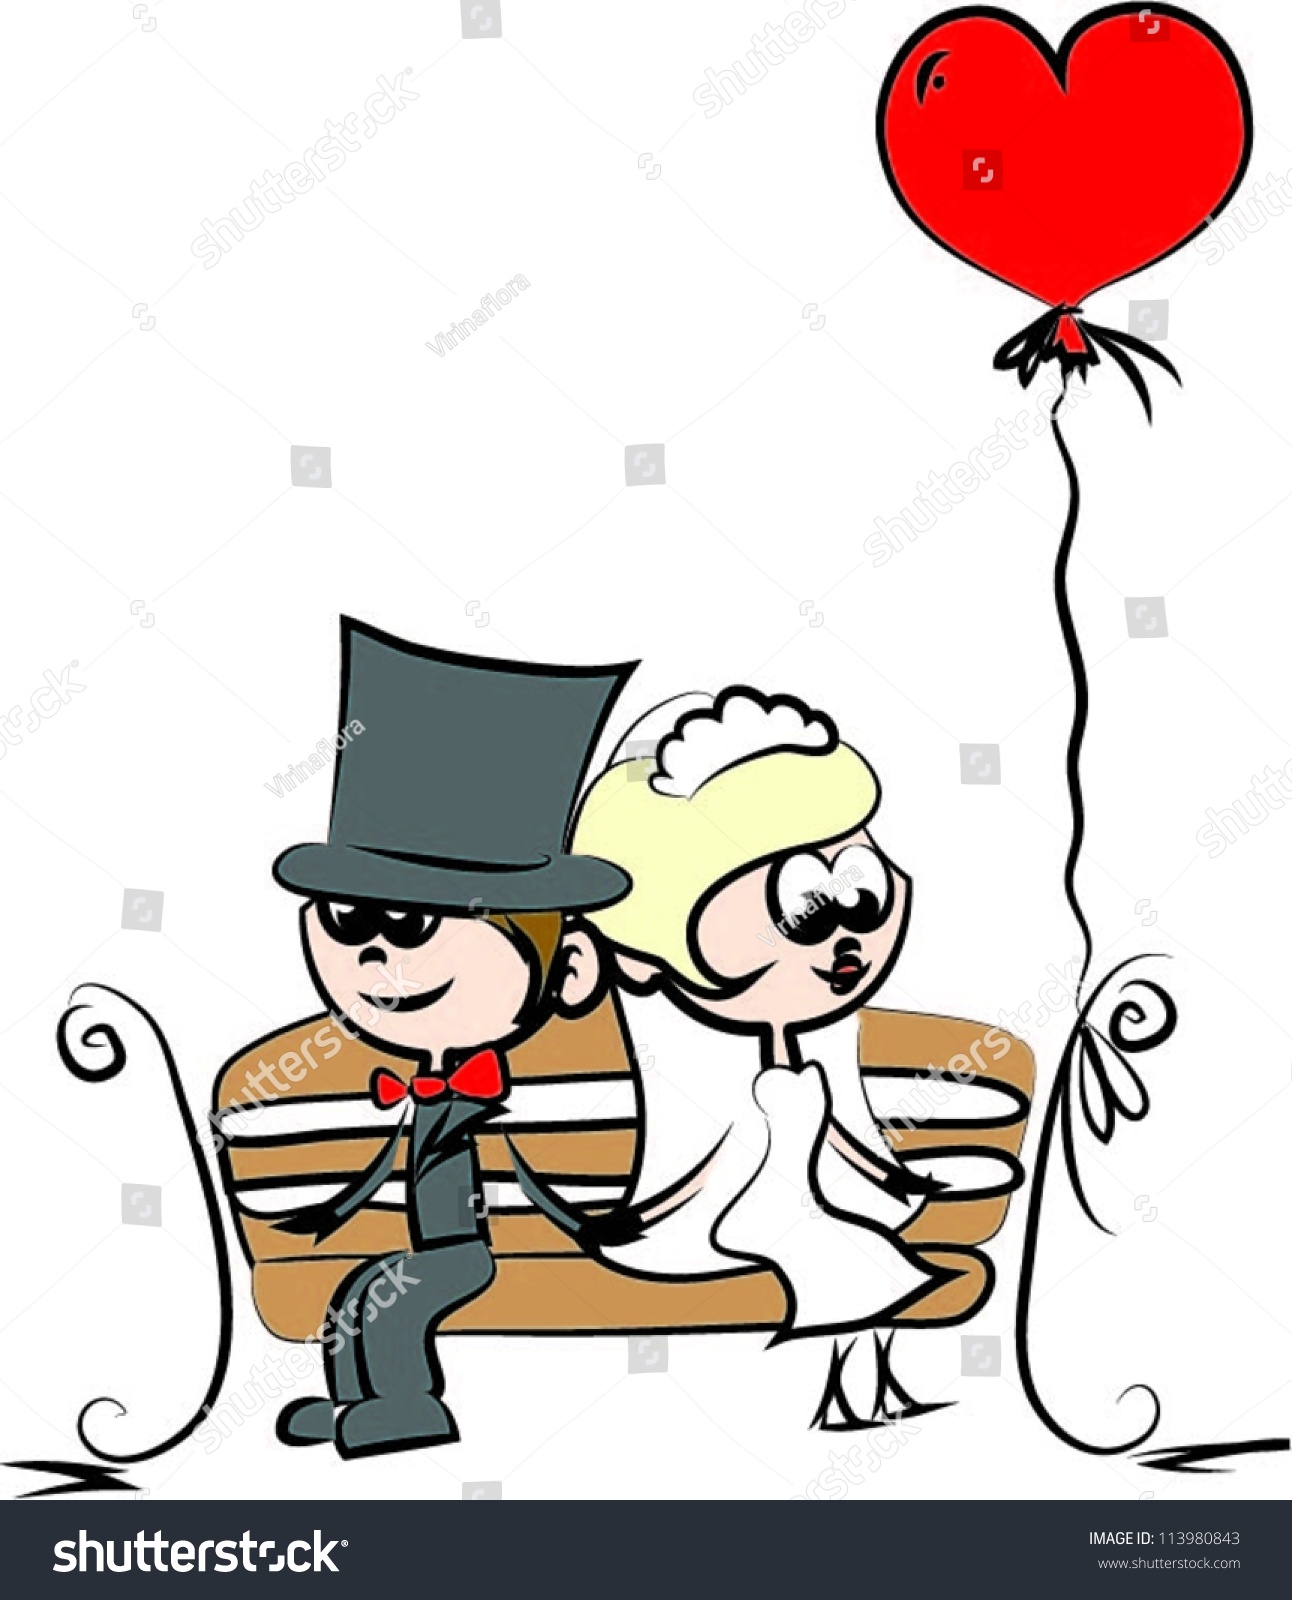 Cartoon Wedding Pictures Stock Vector Illustration 113980843 Shutterstock 0090